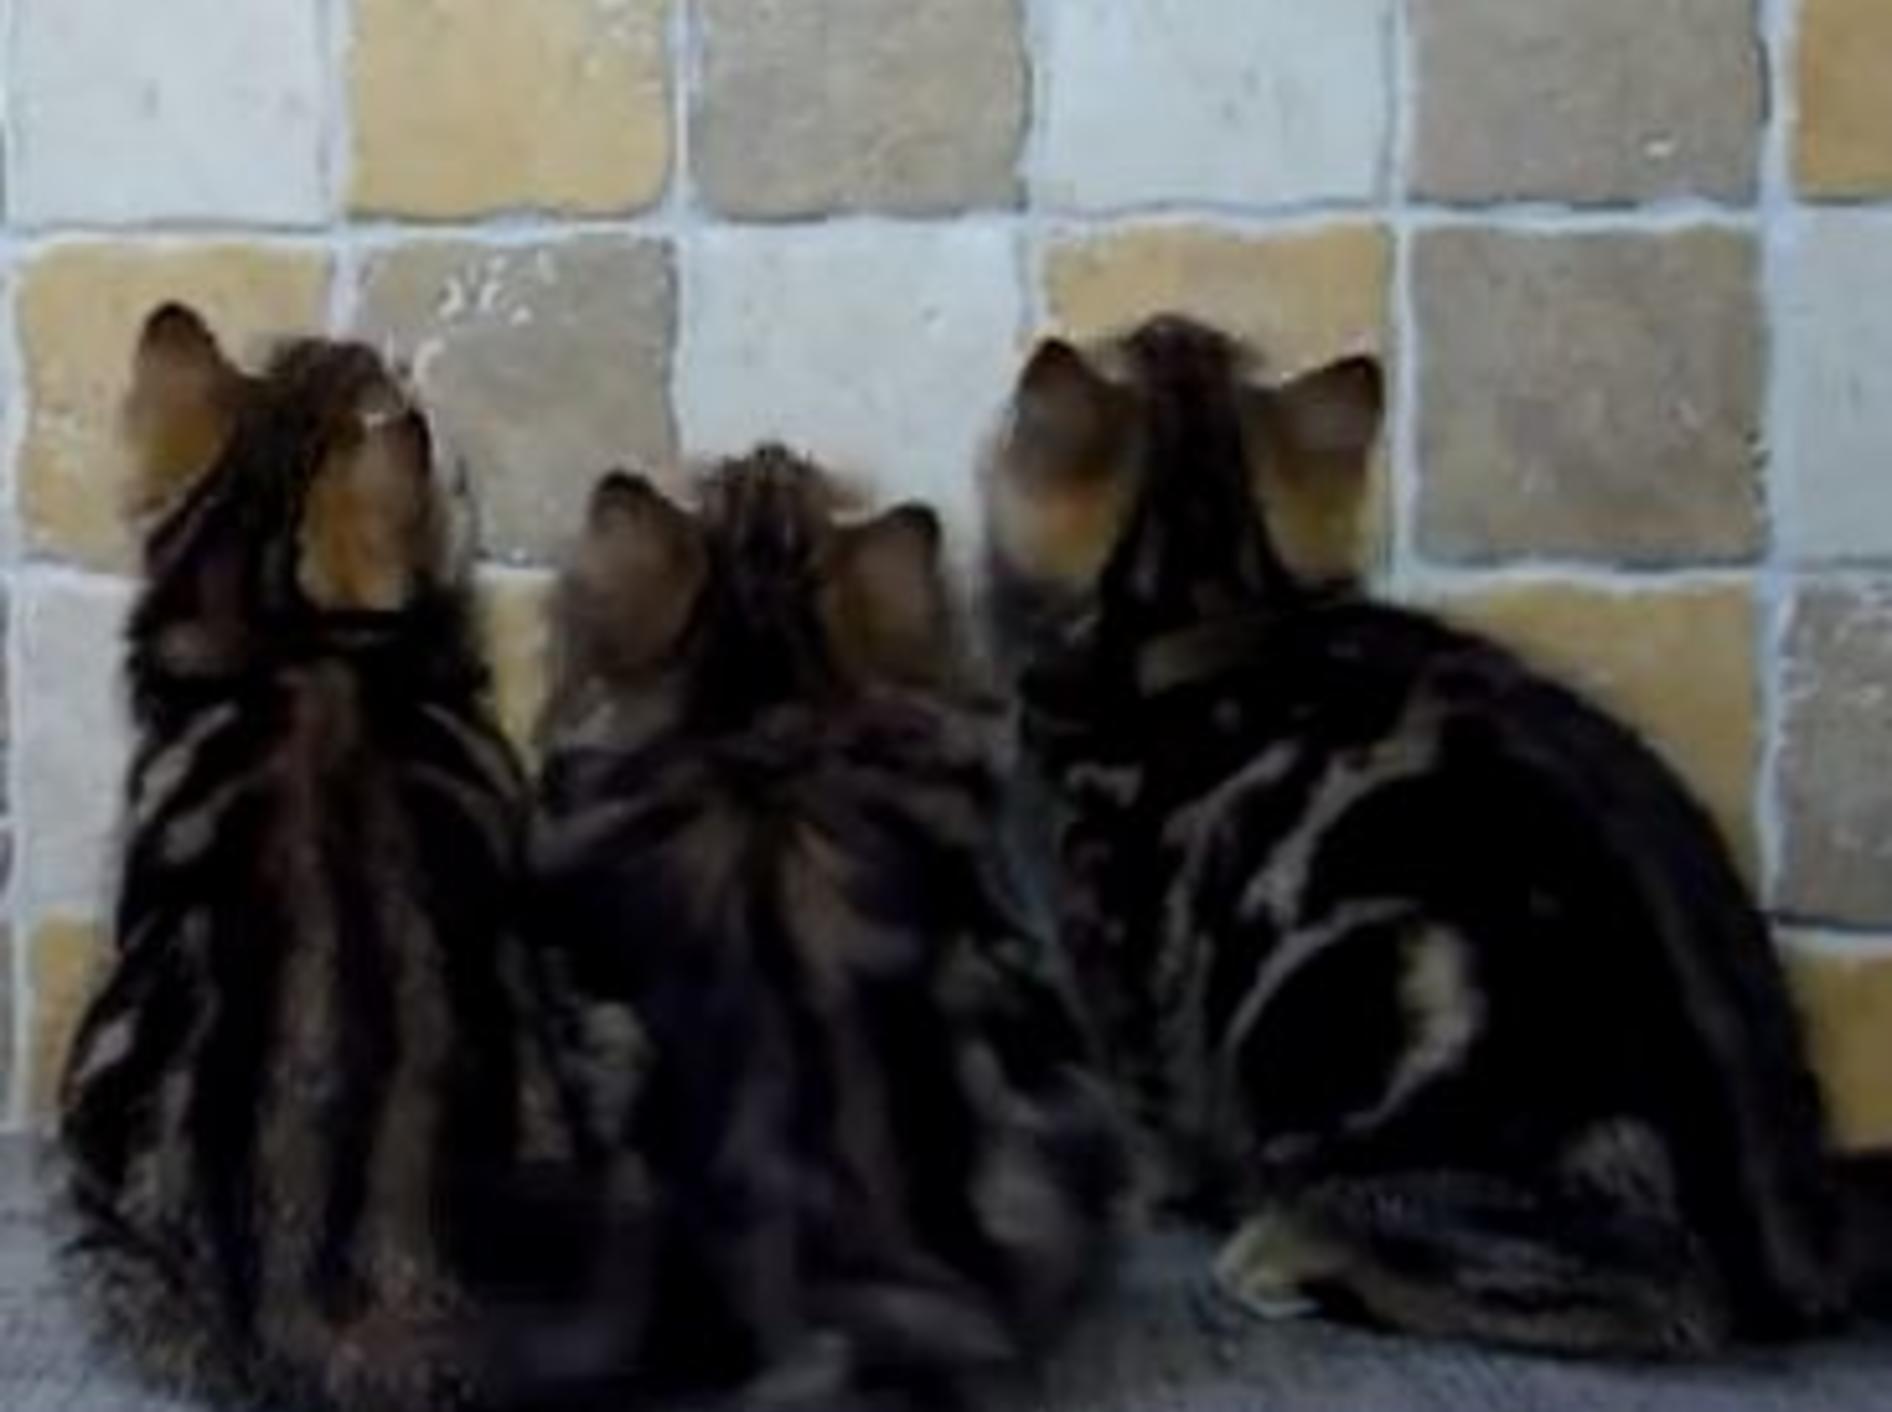 Süße kleine Bande macht Katzengymnastik — Bild: Youtube / Funnycatsandnicefish